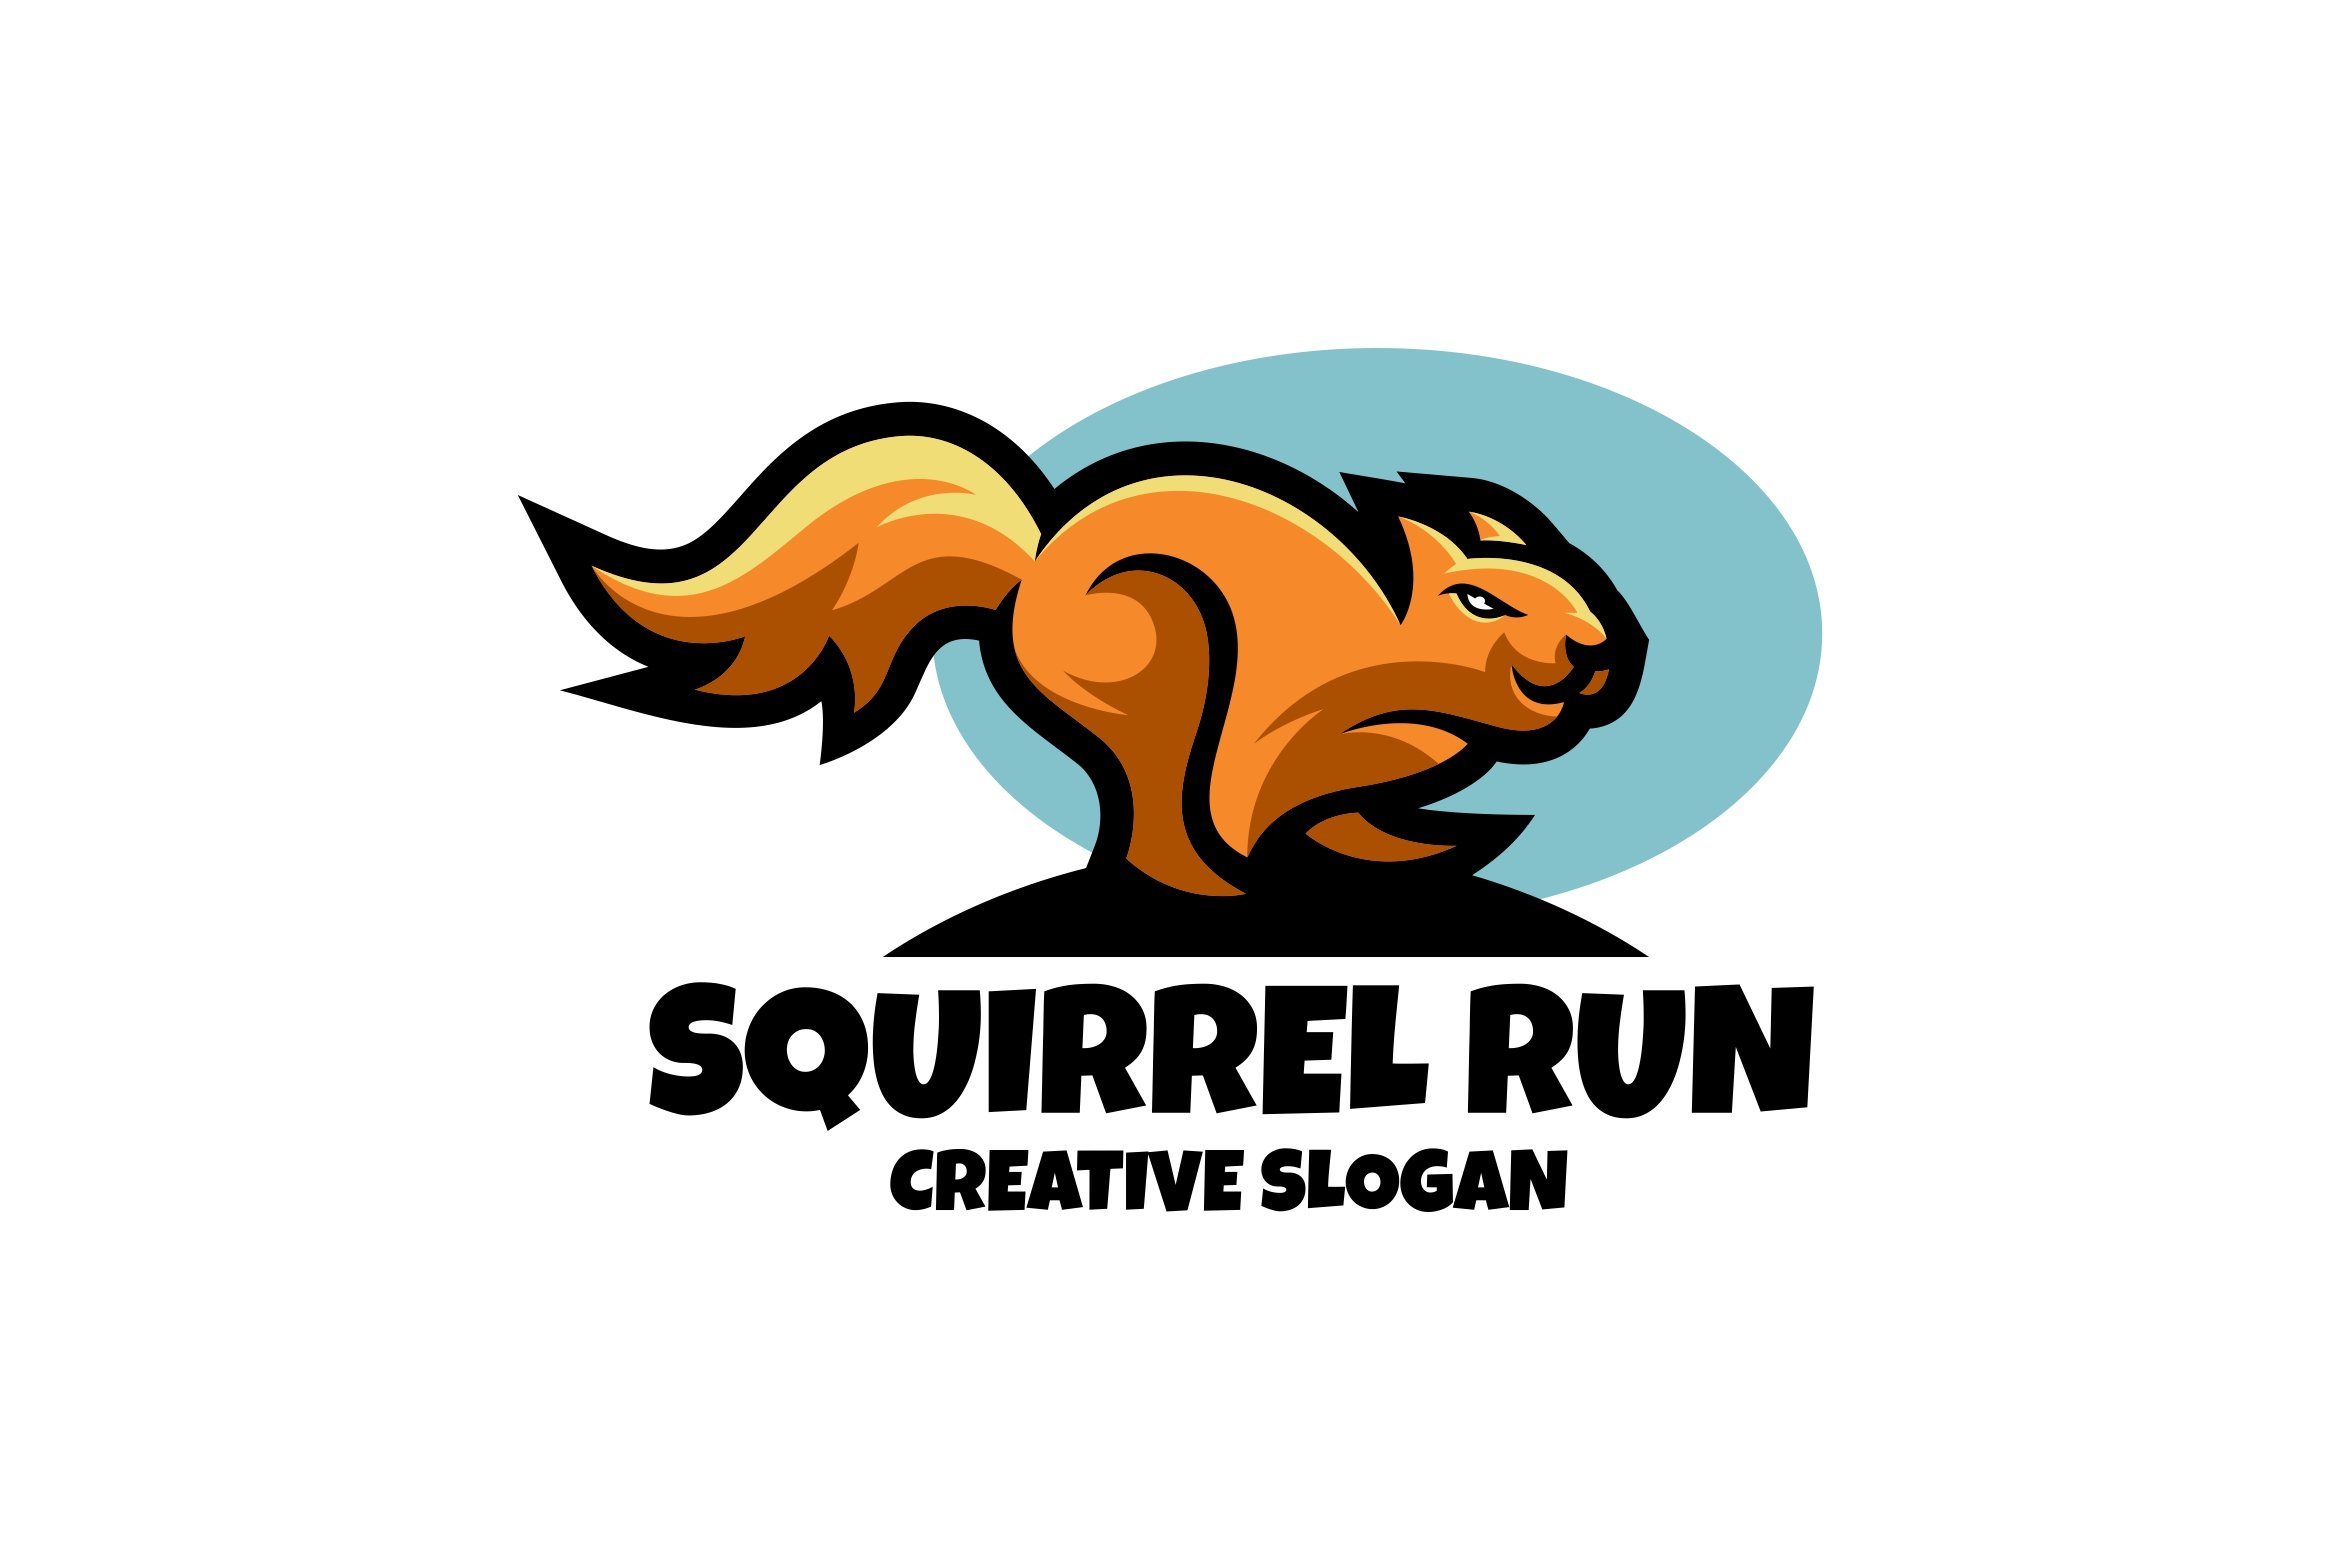 Squirrel Run Creative Logo Template cover image.